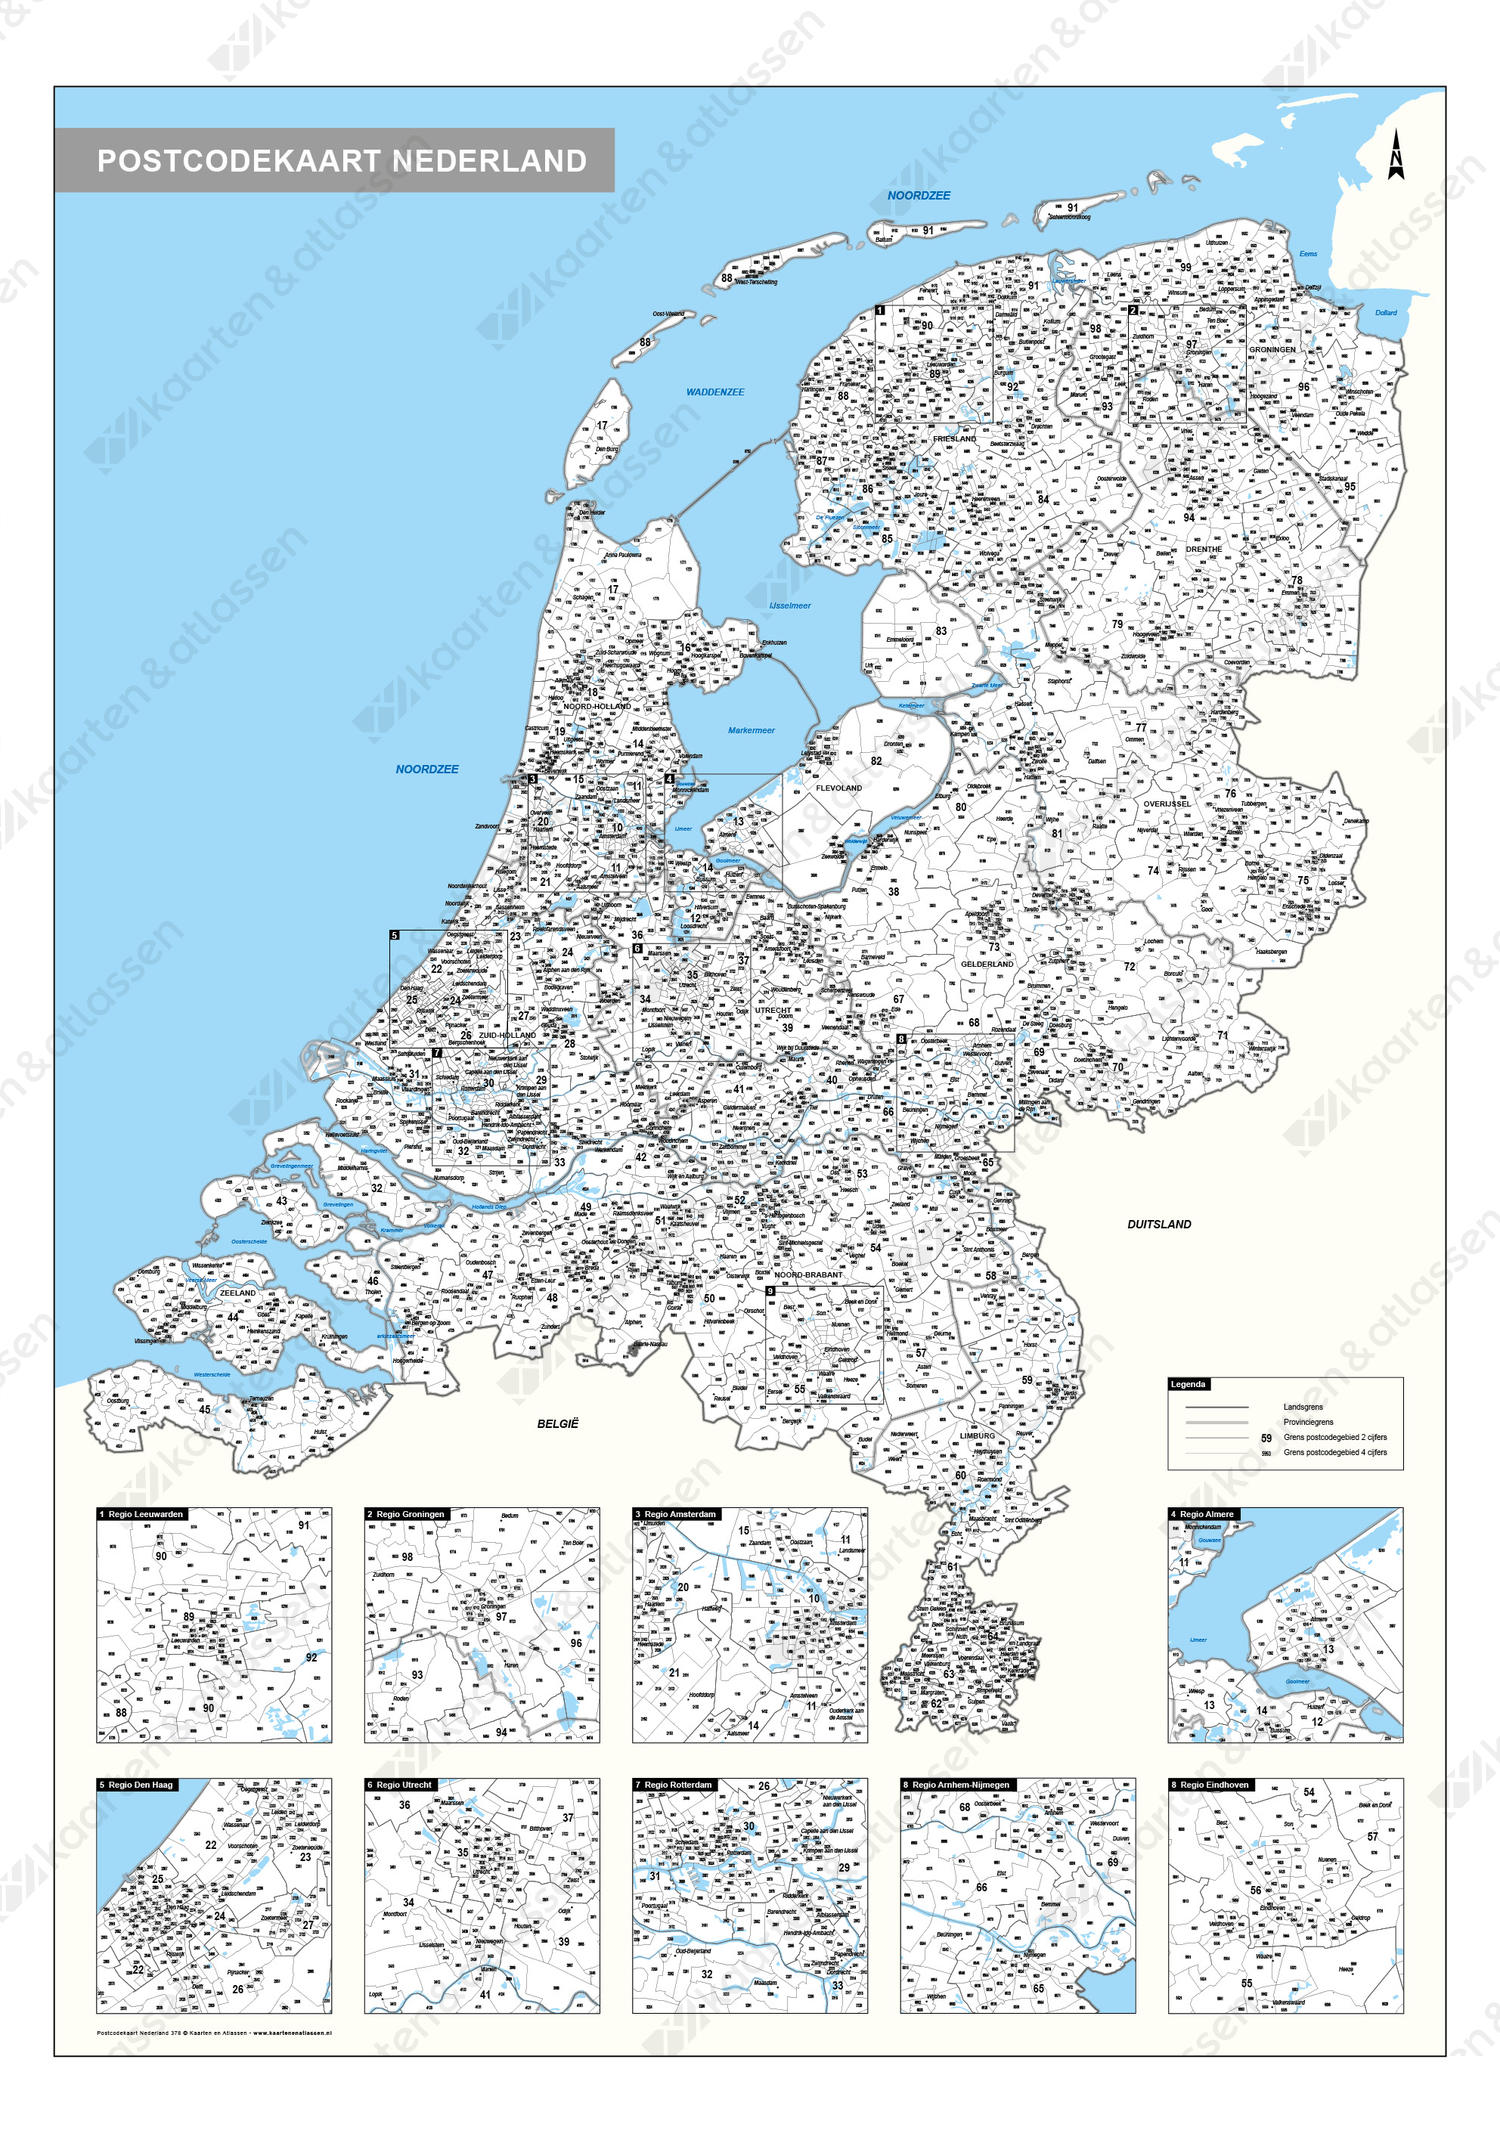 Digitale 4-cijferige Postcodekaart Nederland